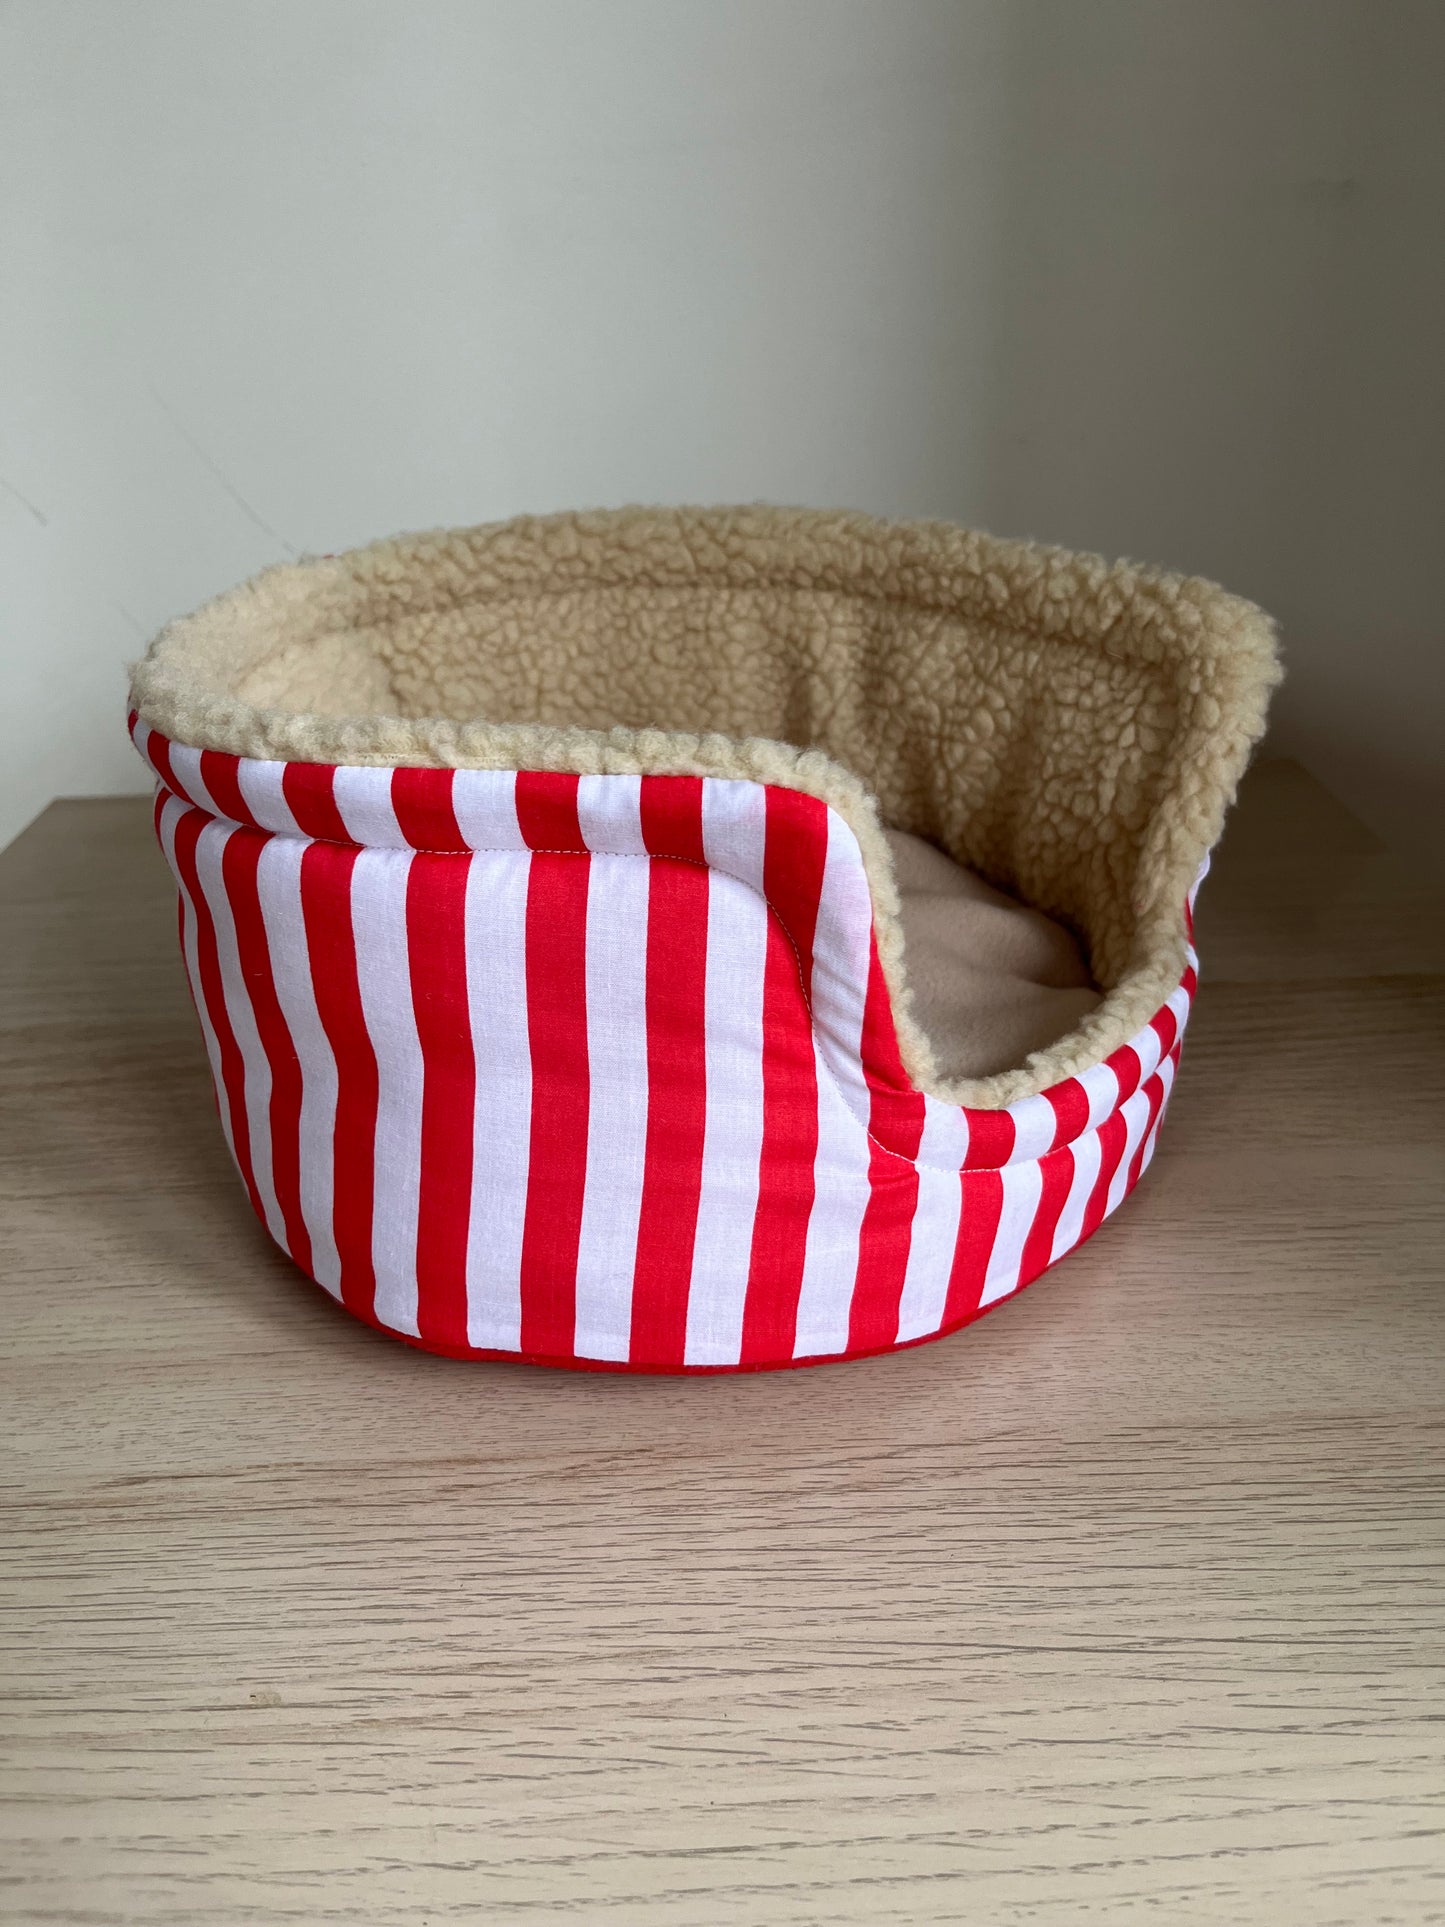 Popcorn Cuddle Cup - Guinea Pig Bed/Hide